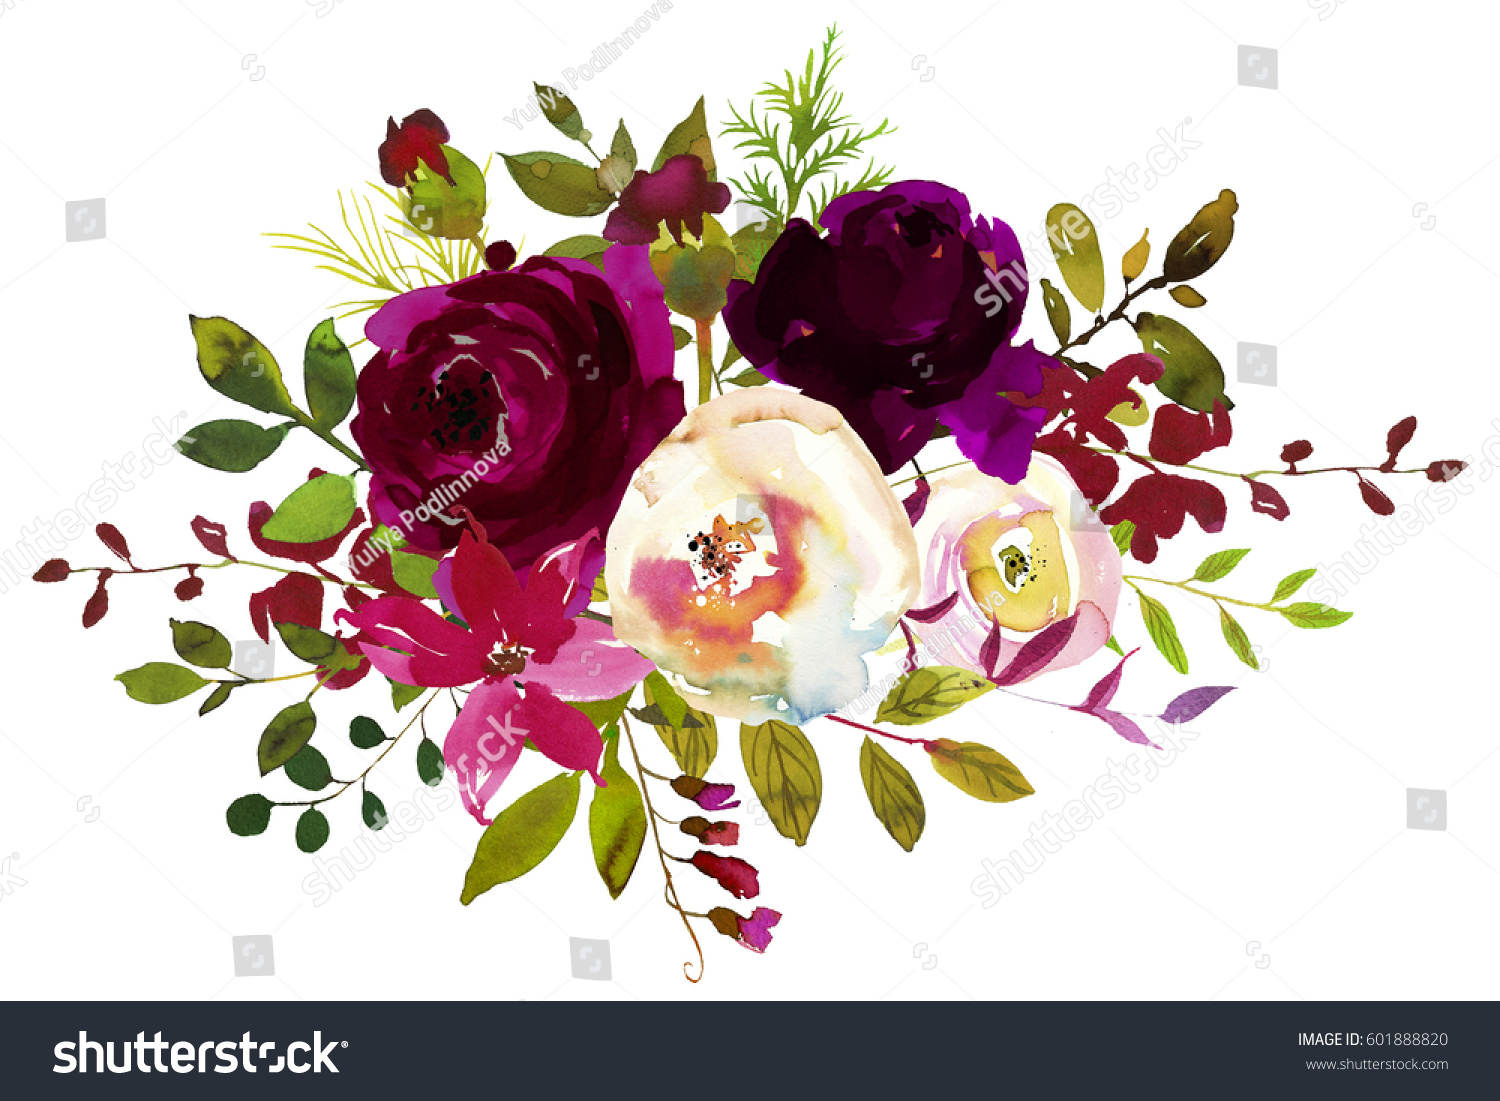 Watercolor Boho Burgundy Red White Floral Stock Illustration 601888820